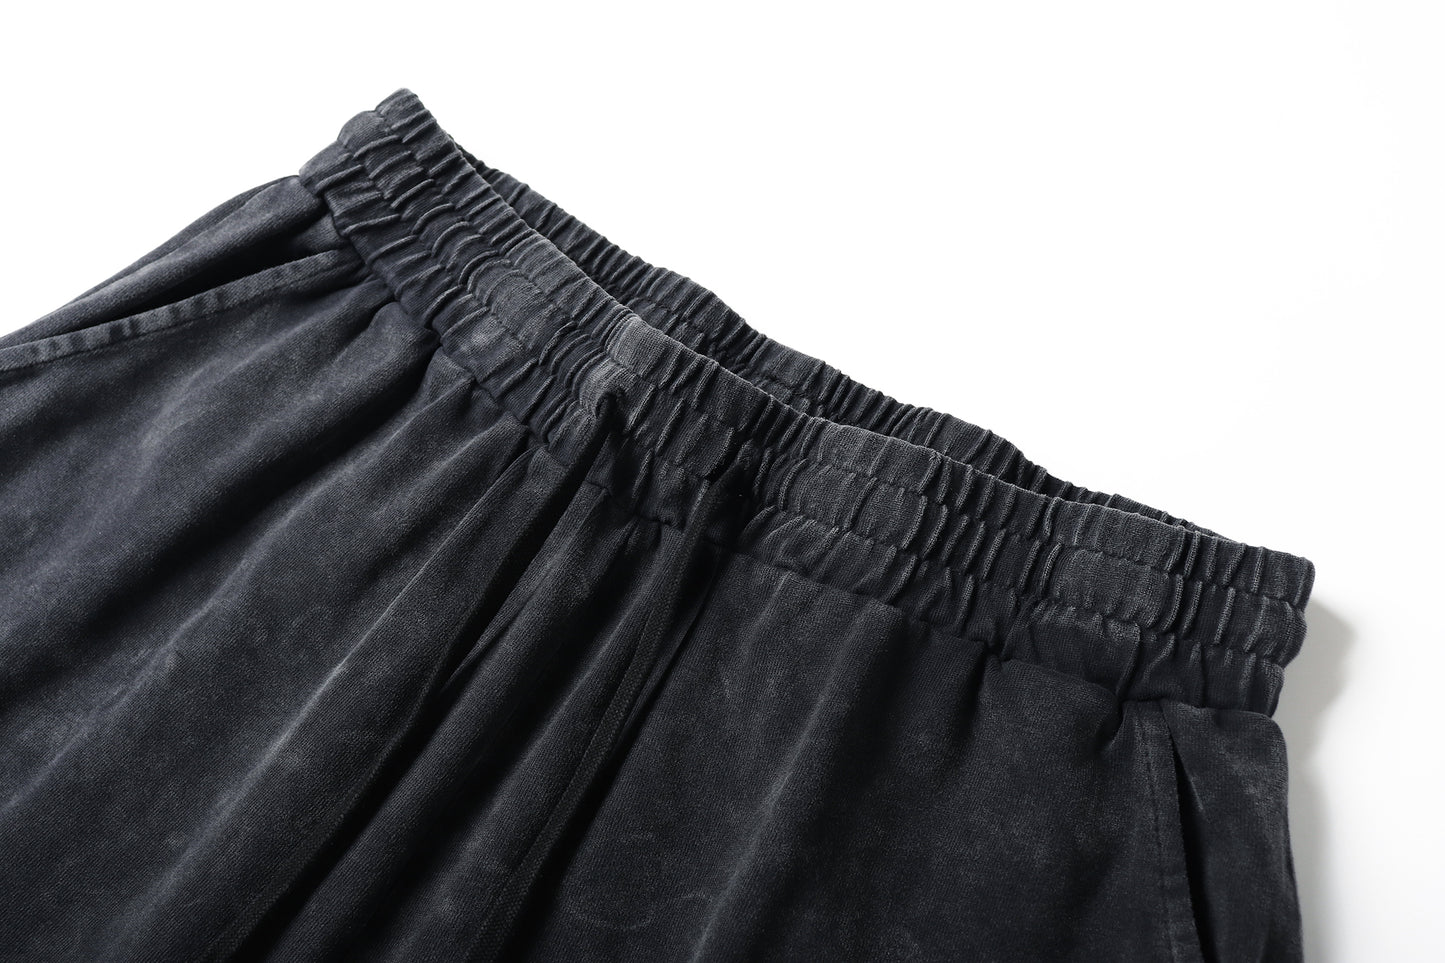 Daily Washed Sweat Shorts / Dark Grey